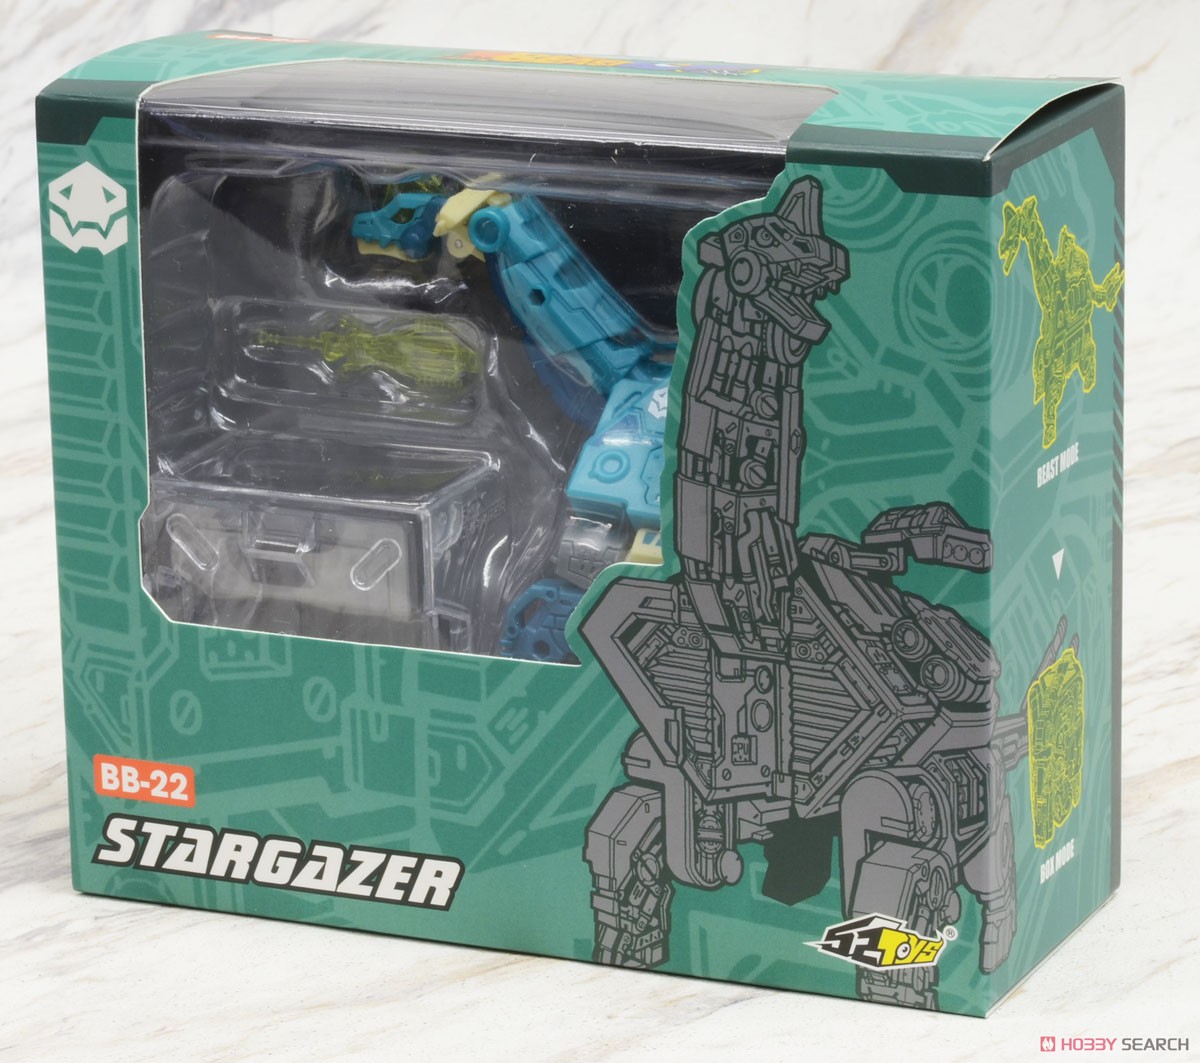 BeastBOX BB-22 STARGAZER (スターゲイザー) (キャラクタートイ) パッケージ1